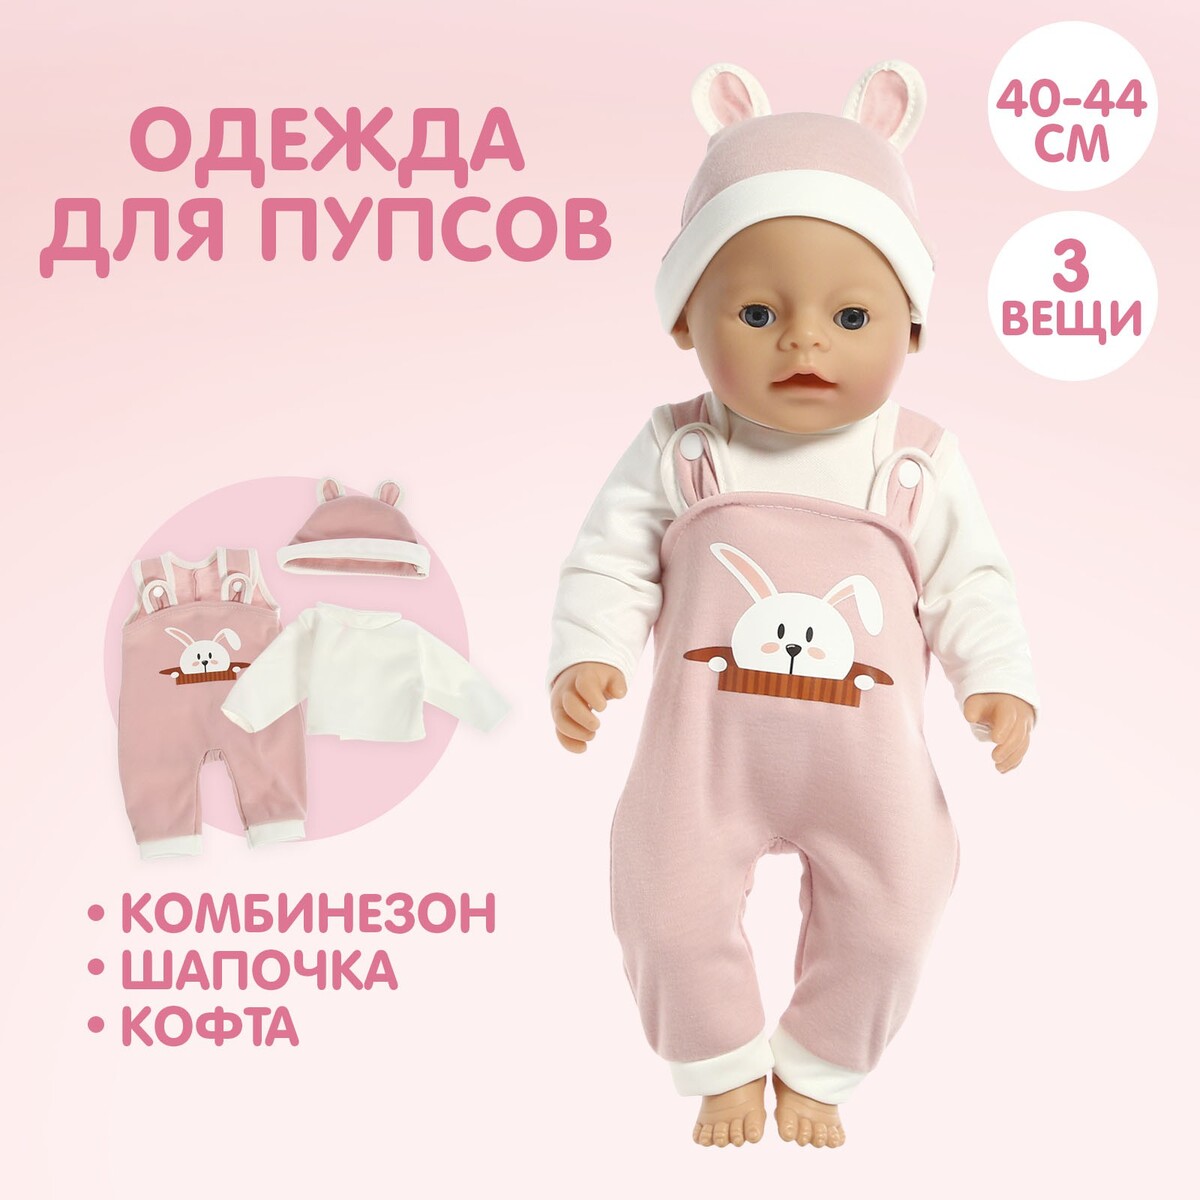 Пижама для кукол 40-44 см, 3 вещи, текстиль, на липучках пижама кофта